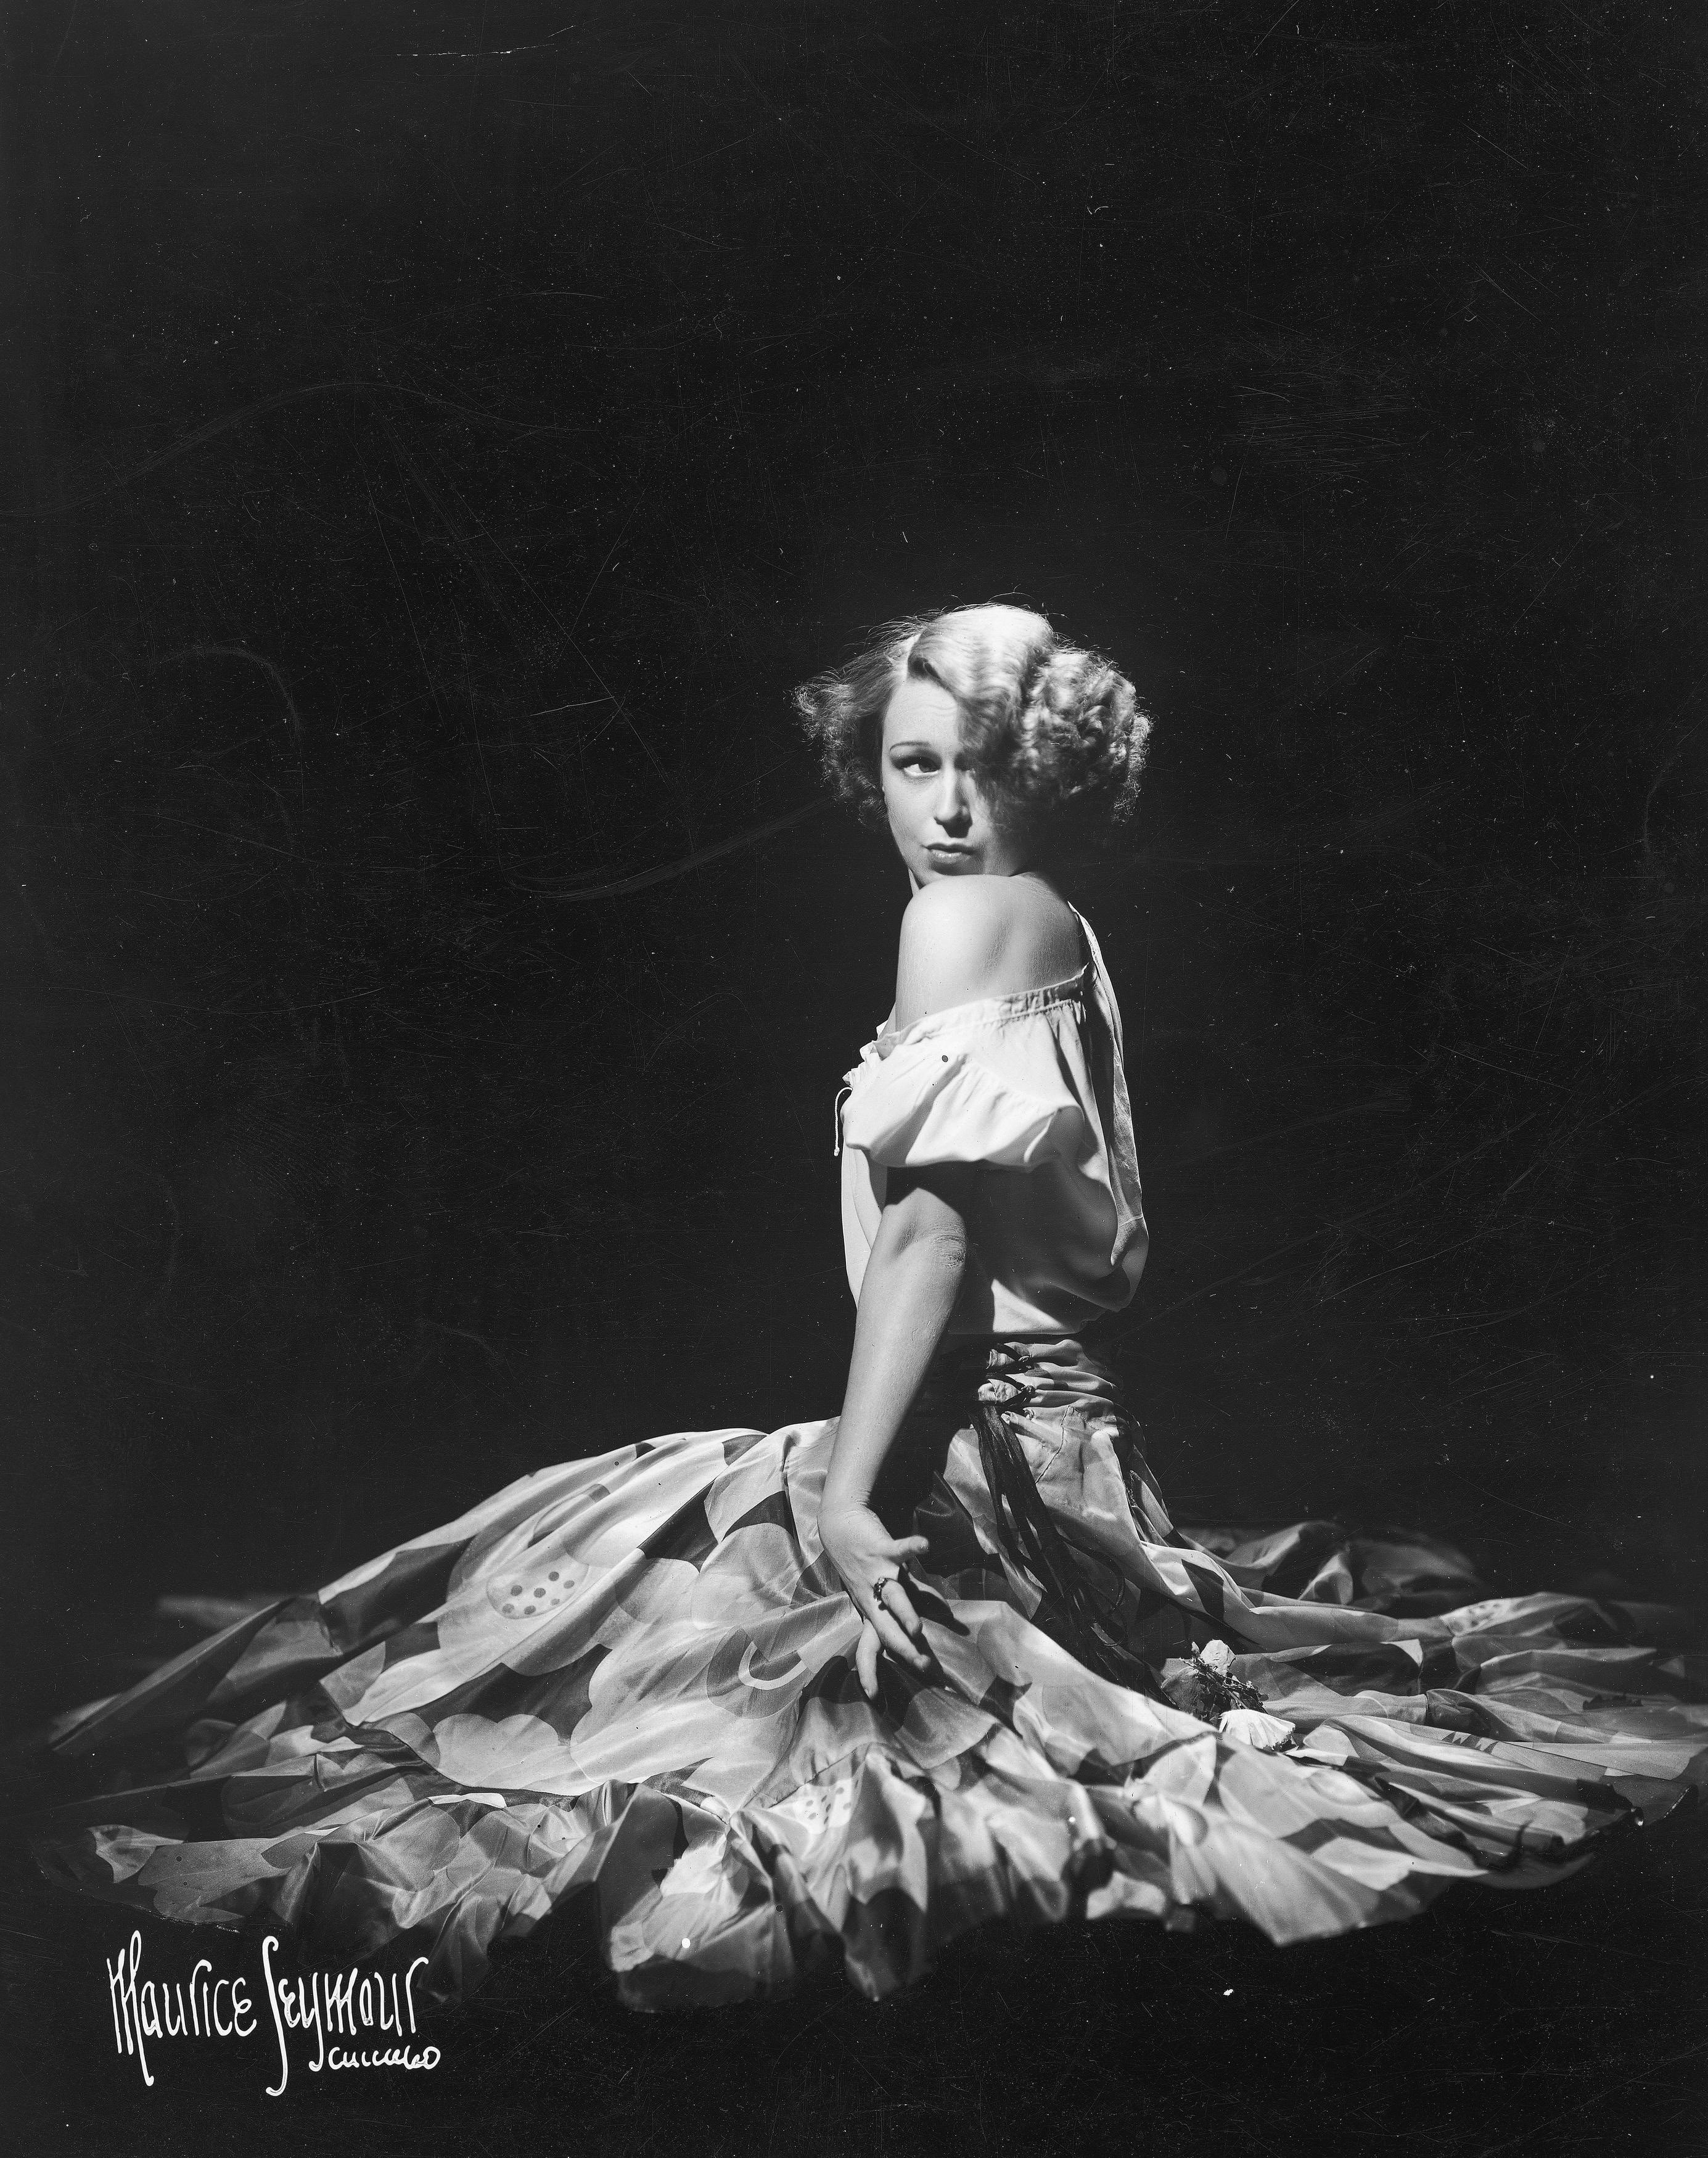 Maurice Seymour, Chicago :: Actress and dancer Loda Halama (Leokadia Halama), 1937 | src Narodowe Archiwum Cyfrowe